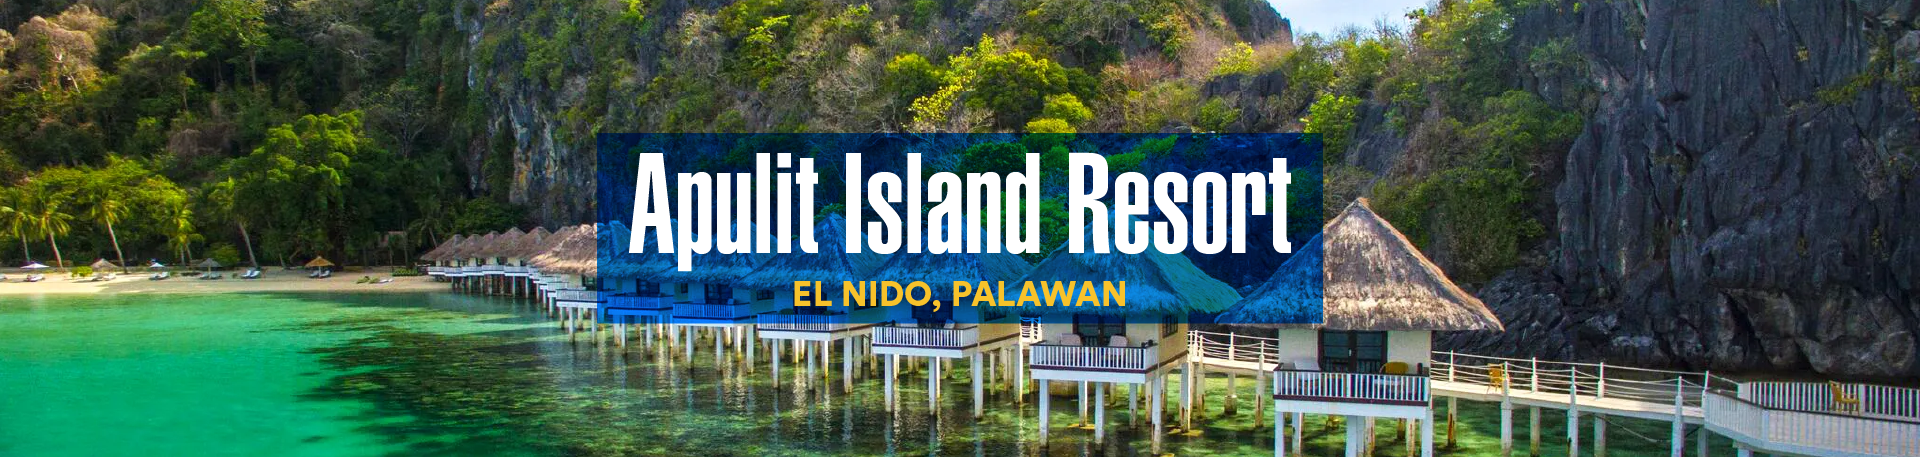 Apulit Island Resort. El Nido, Palawan